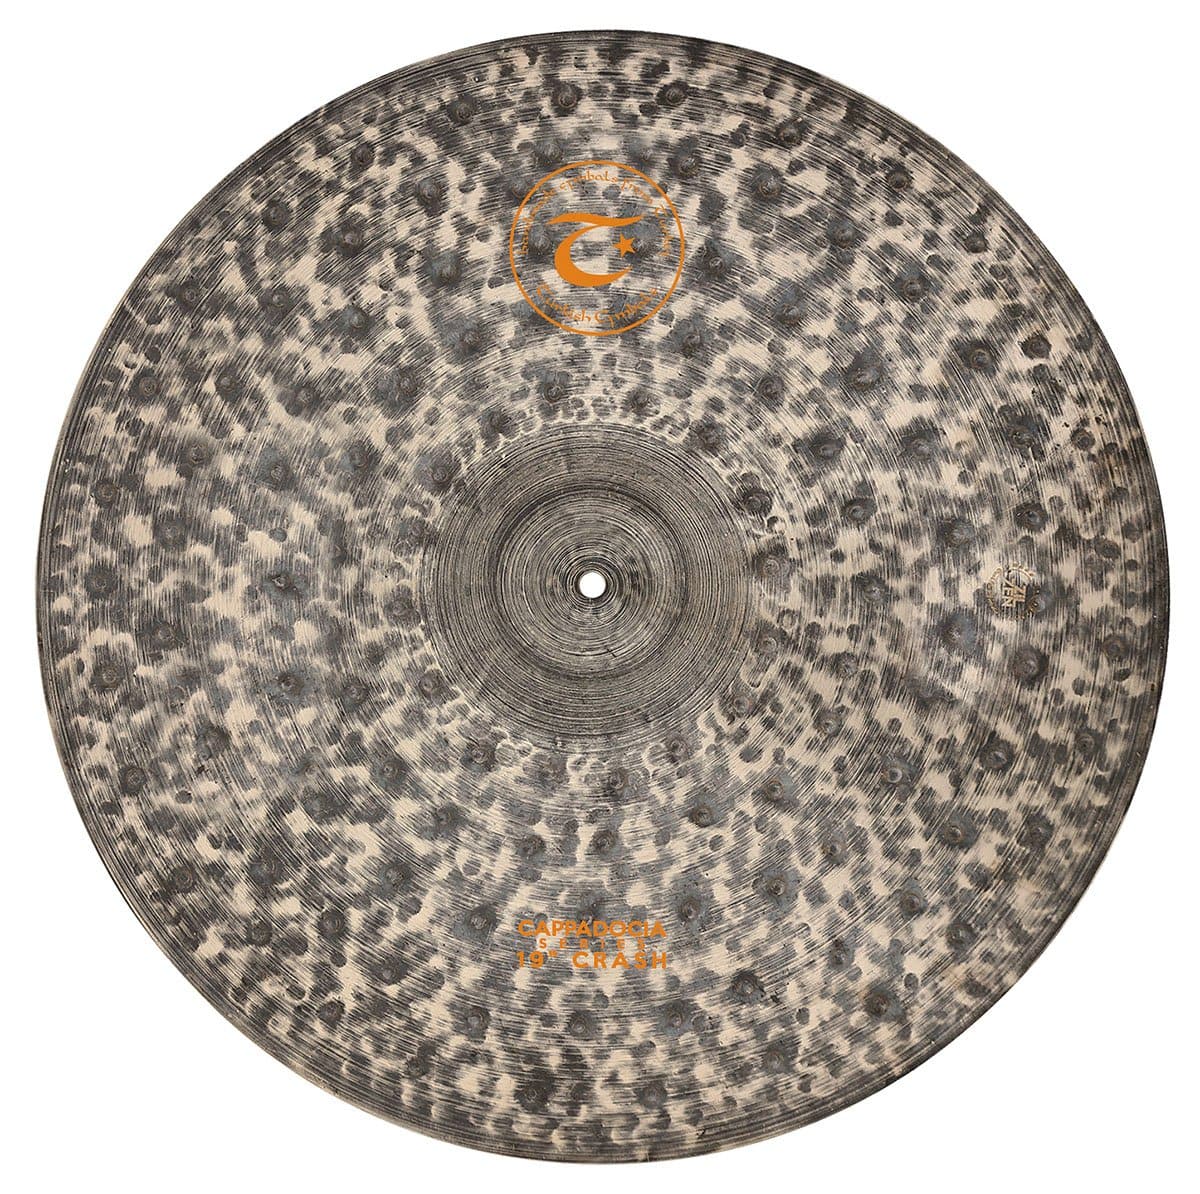 Turkish Cappadocia Crash Cymbal 19" 1428 grams